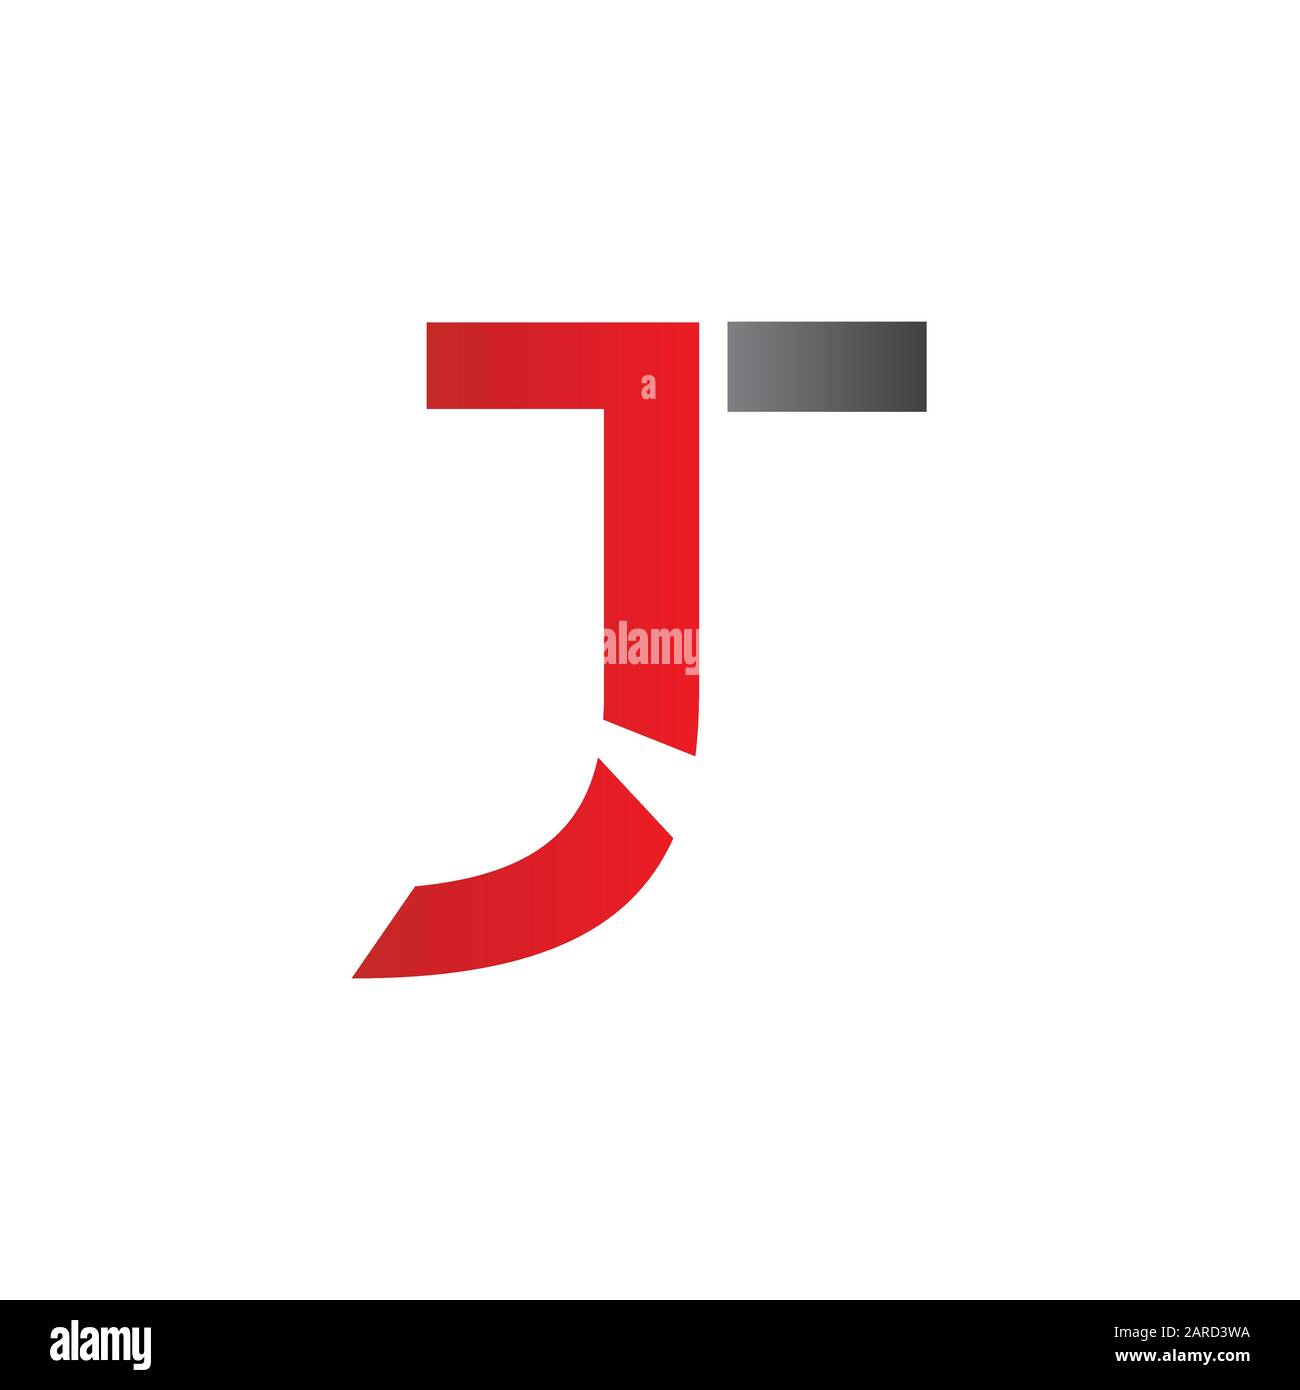 Vektor-Vorlage für das Design des JT-Logos. Erste Verknüpfte Letter Design JT Vector Illustration Stock Vektor